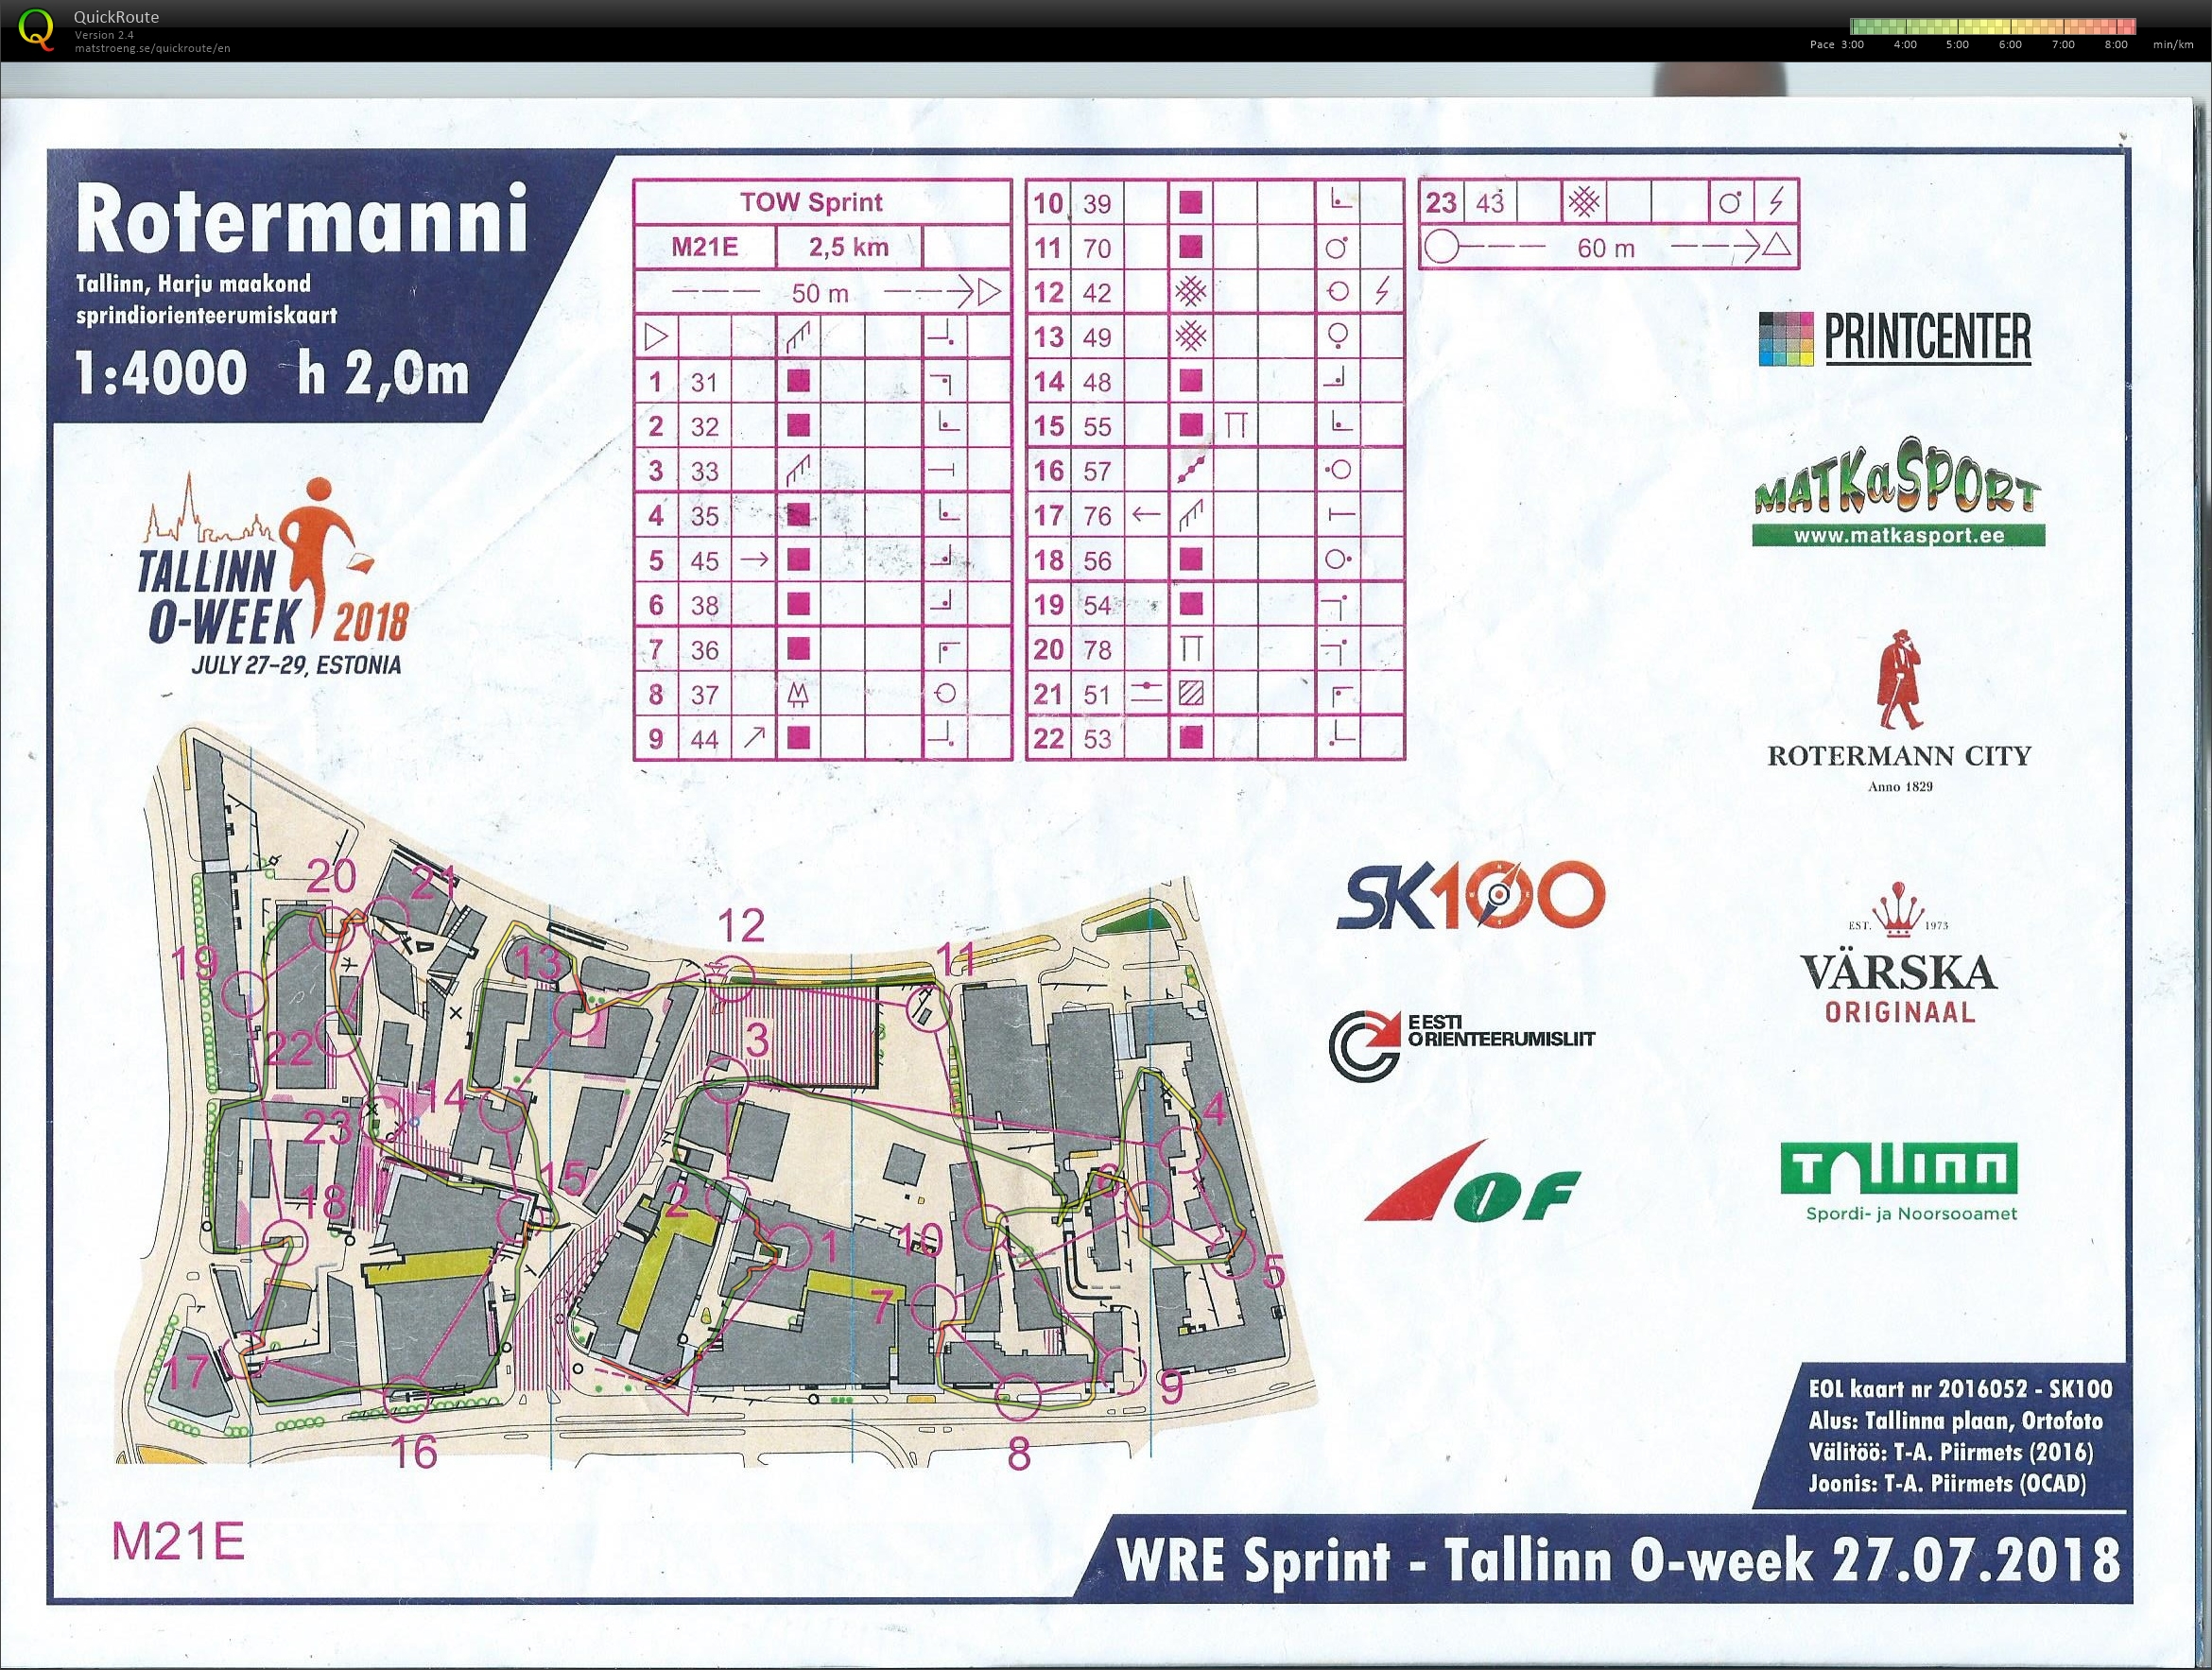 Z590 - Tallinn O-Week Sprint WRE (27-07-2018)